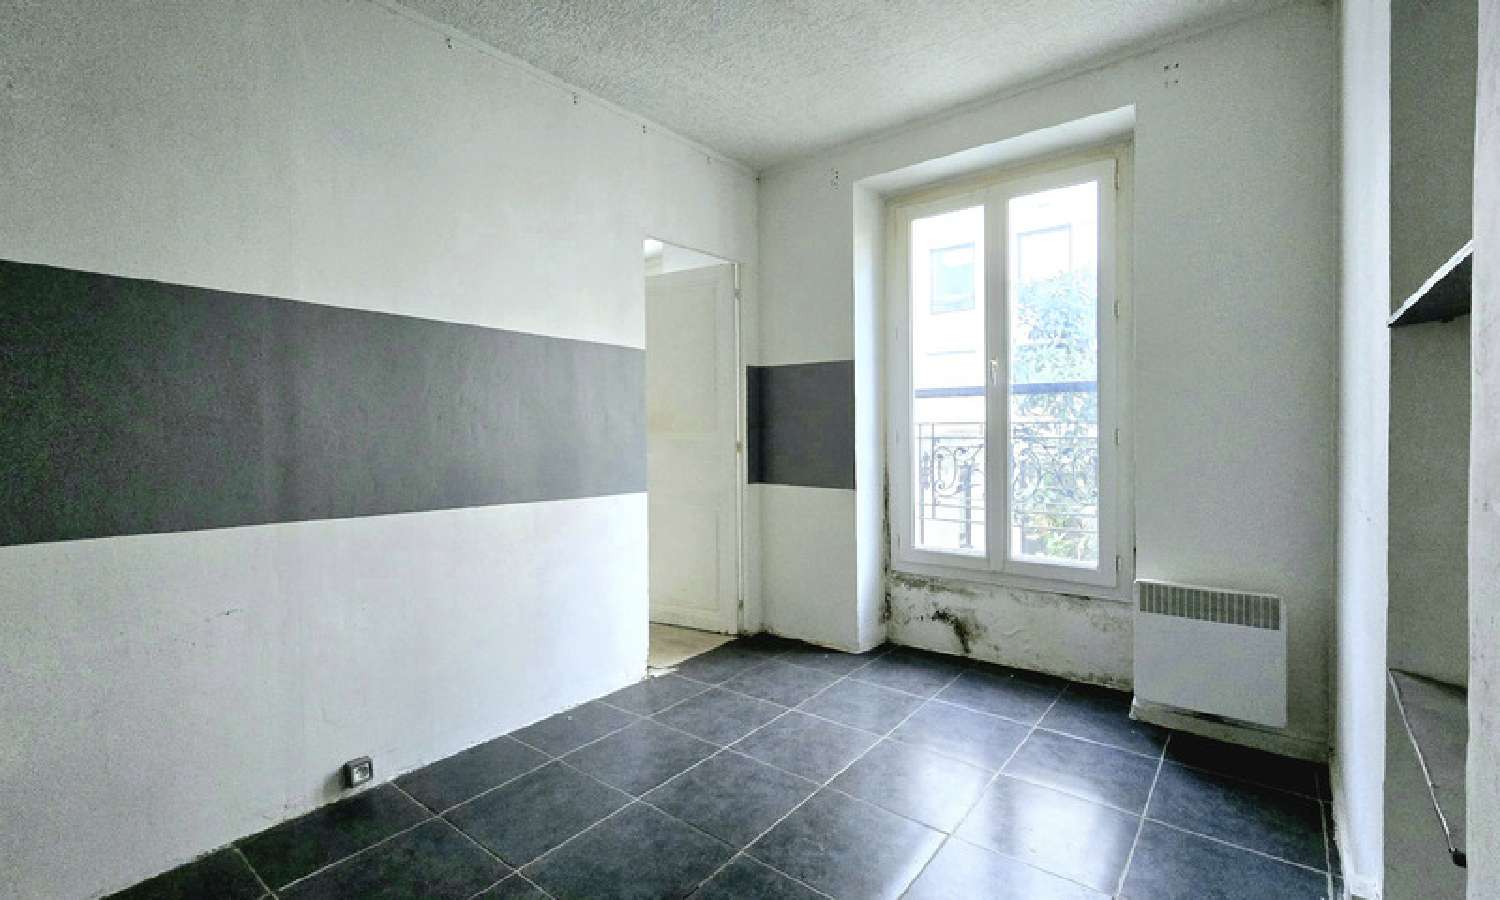  te koop appartement Paris 18e Arrondissement Parijs (Seine) 4